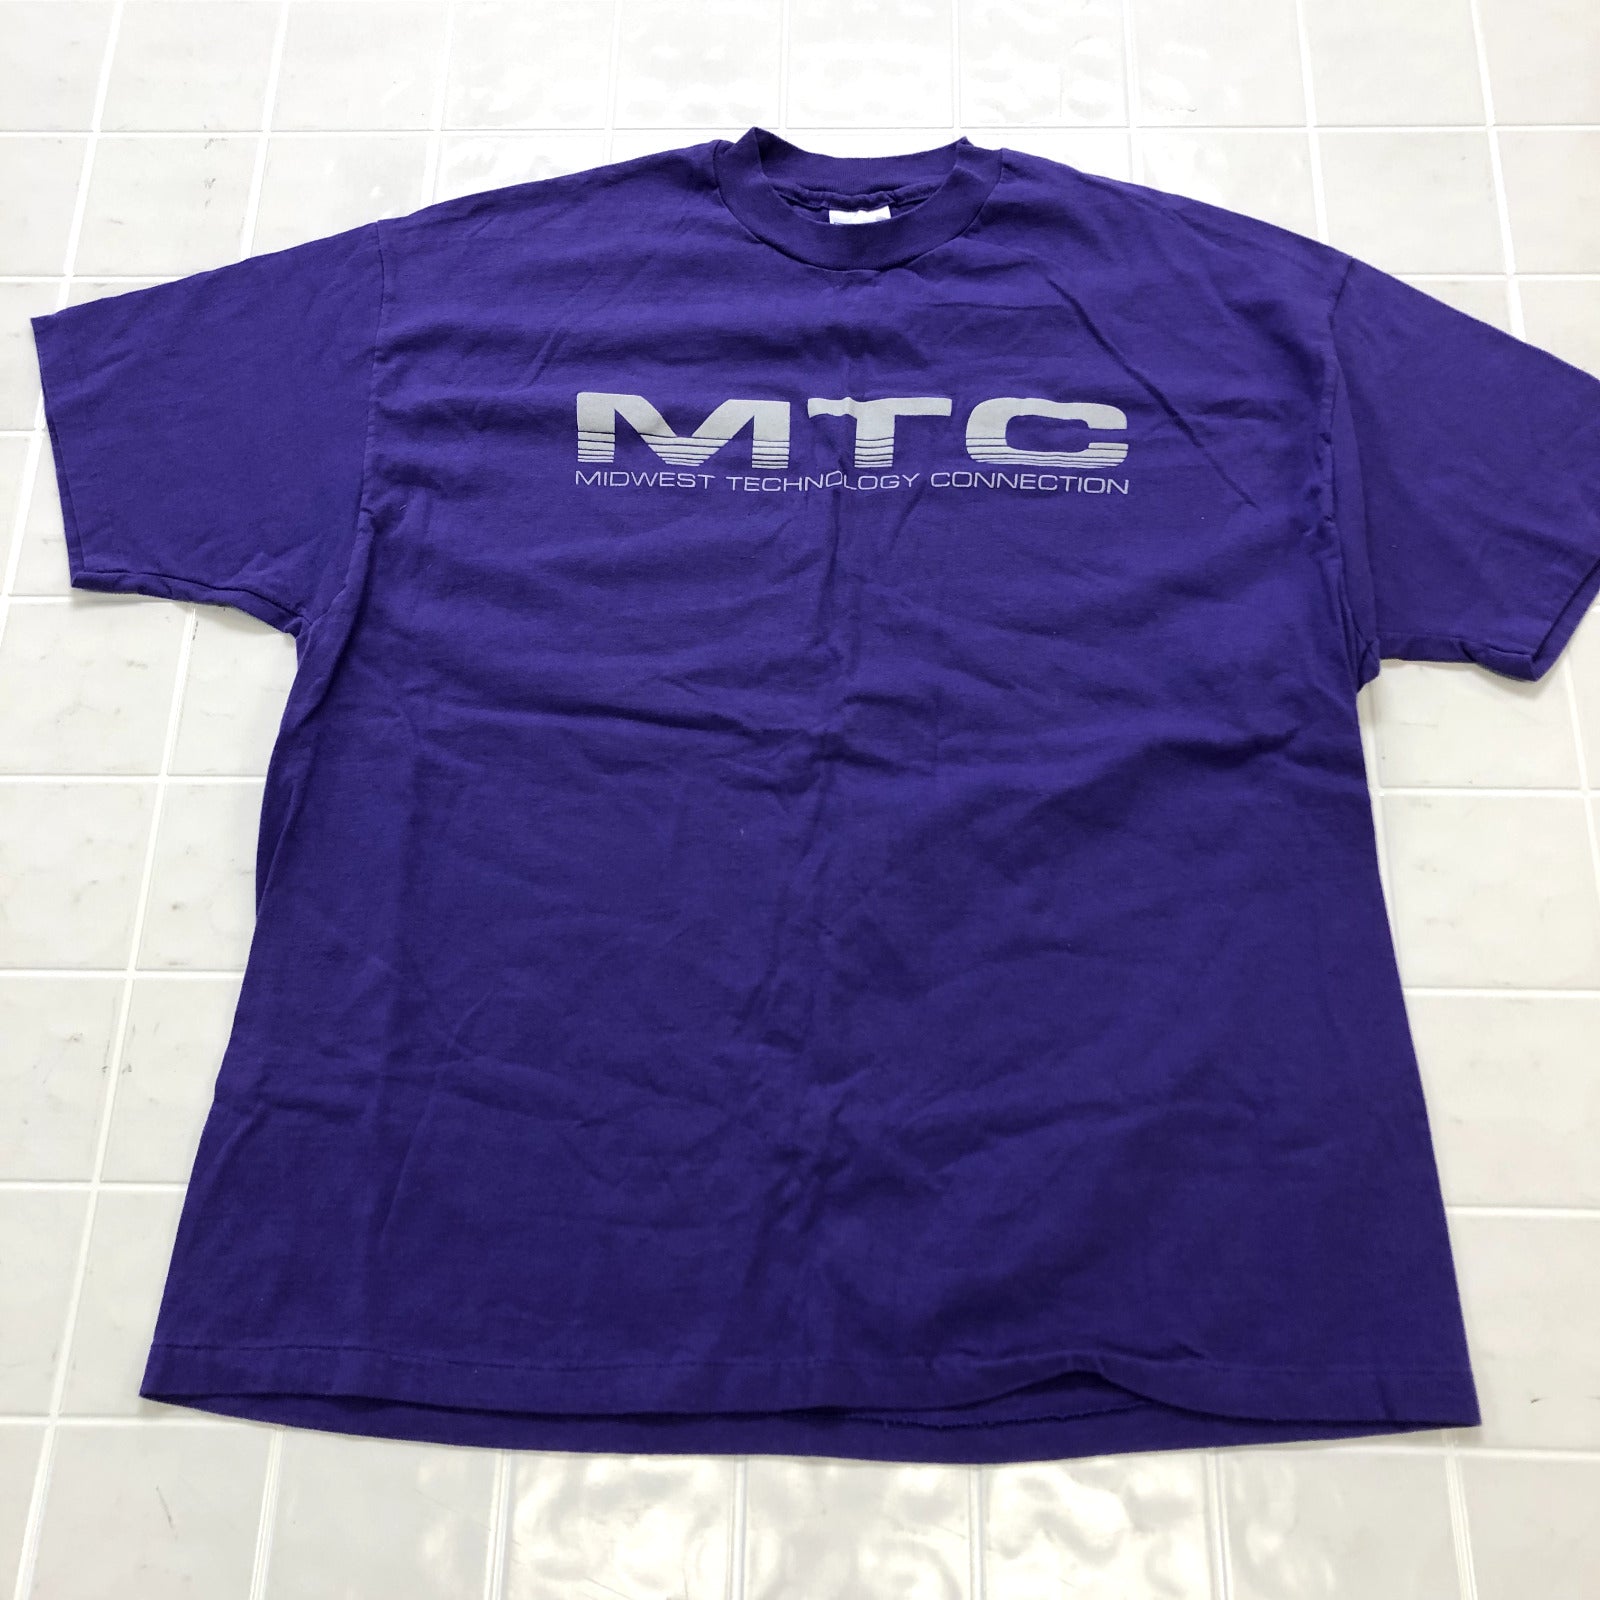 Vintage Hanes Purple Midwest Technology Connection T-shirt Adult Size 2XL